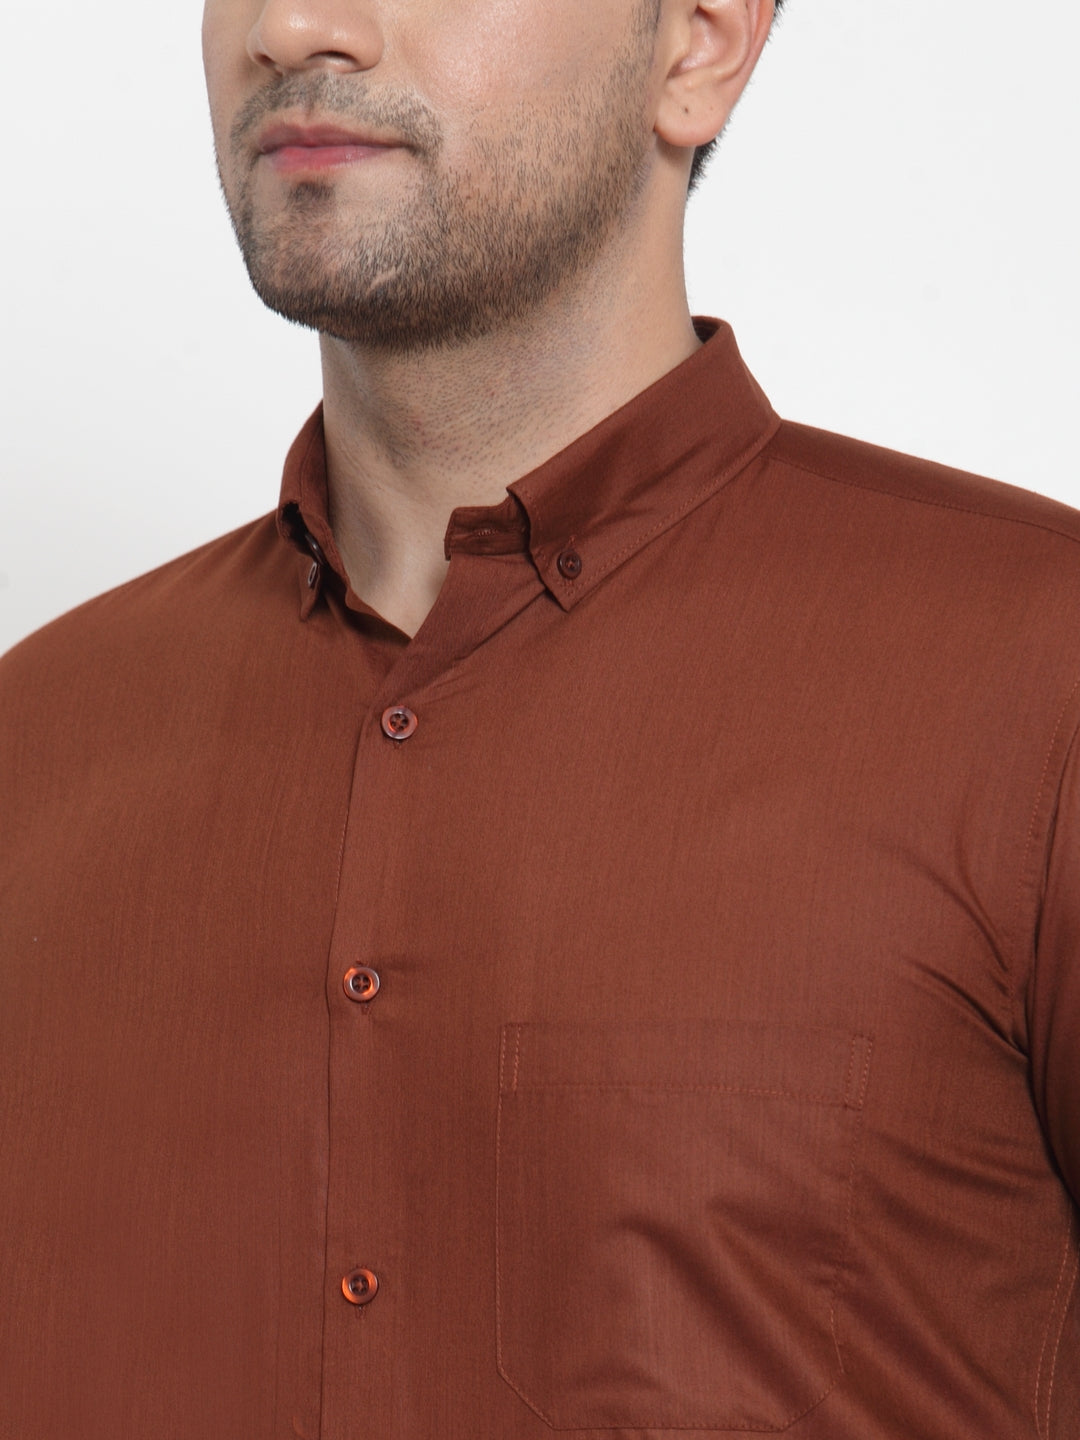 Men's Brown Cotton Solid Button Down Formal Shirts ( SF 713Brown ) - Jainish